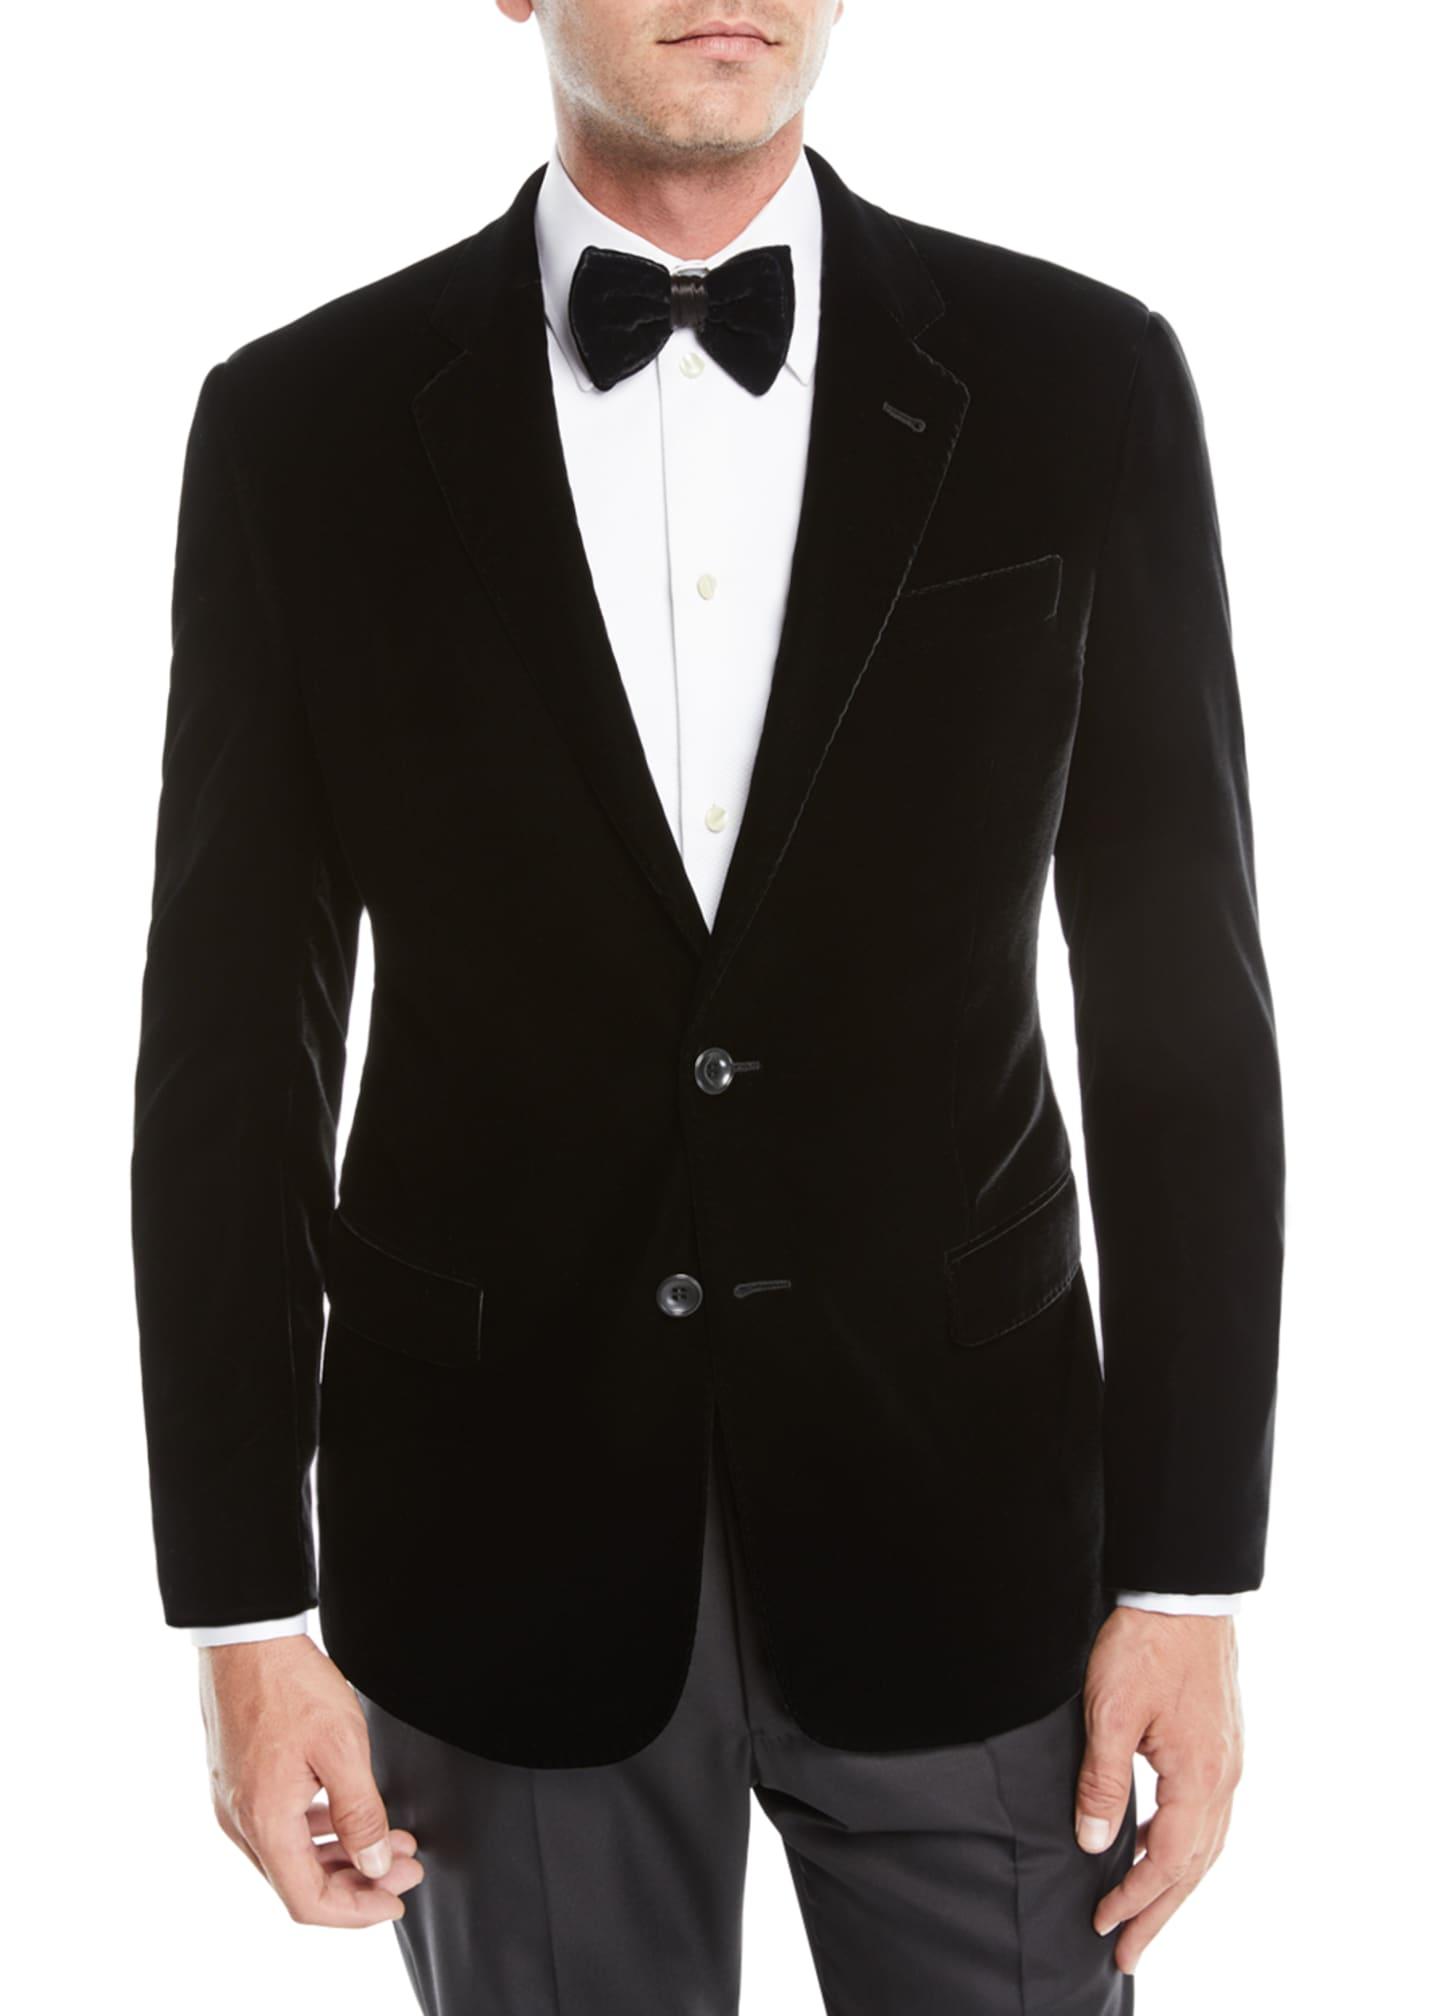 Giorgio Armani Men's Velvet Two-button Jacket in Black for Men - Lyst